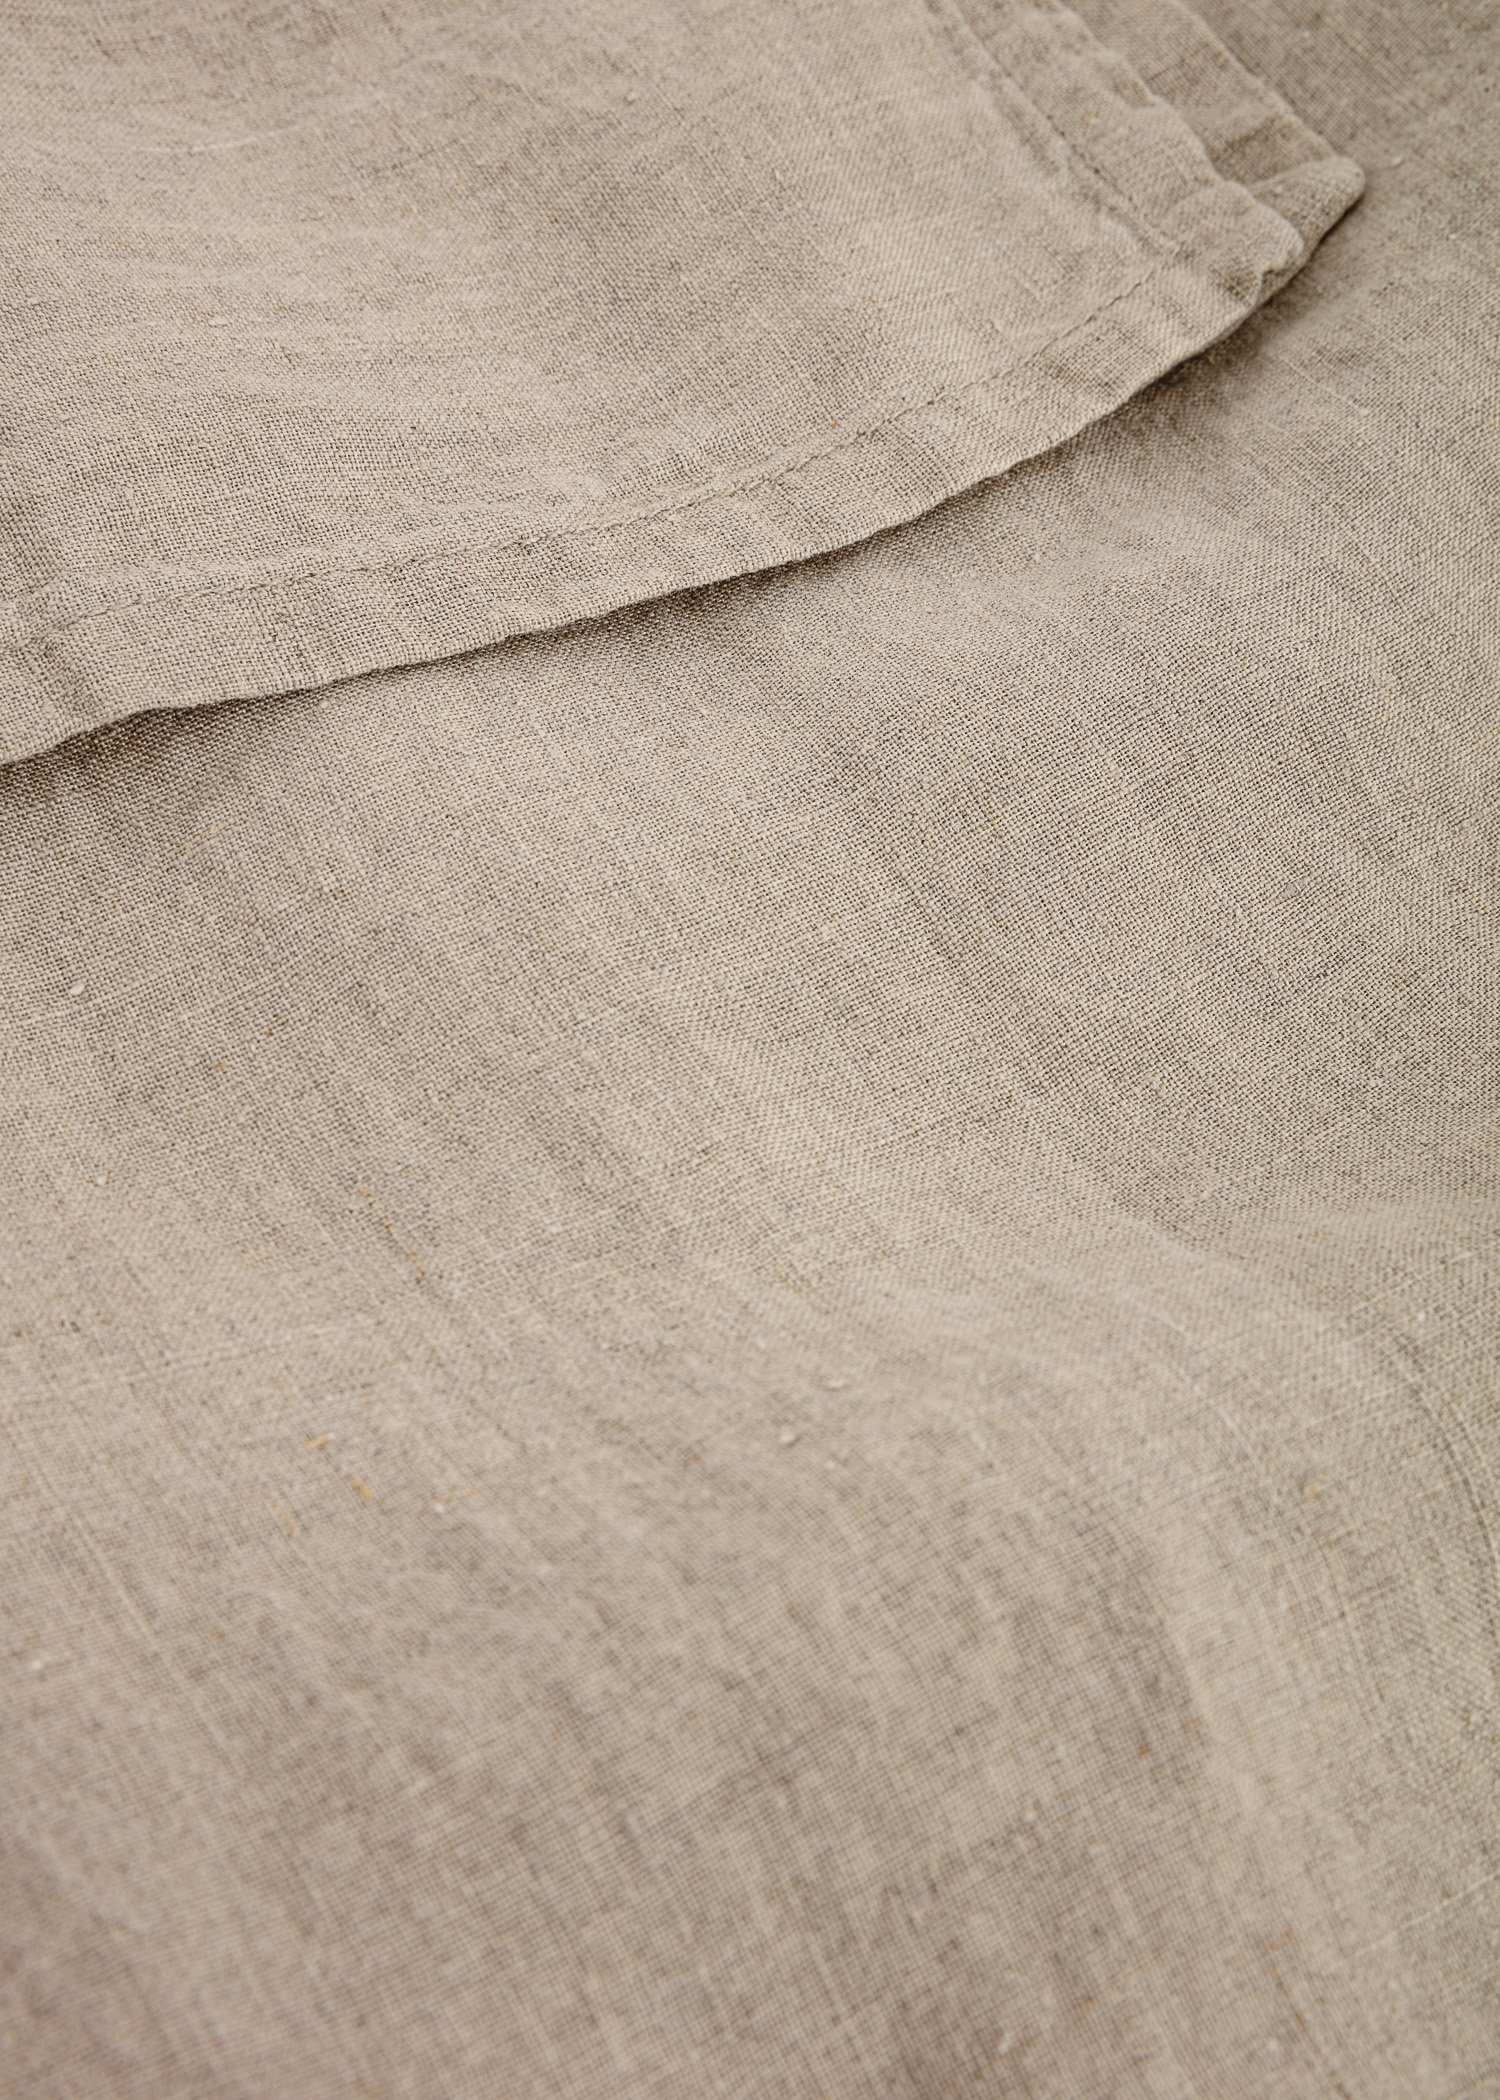 Beige linen table cloth  thumbnail 1